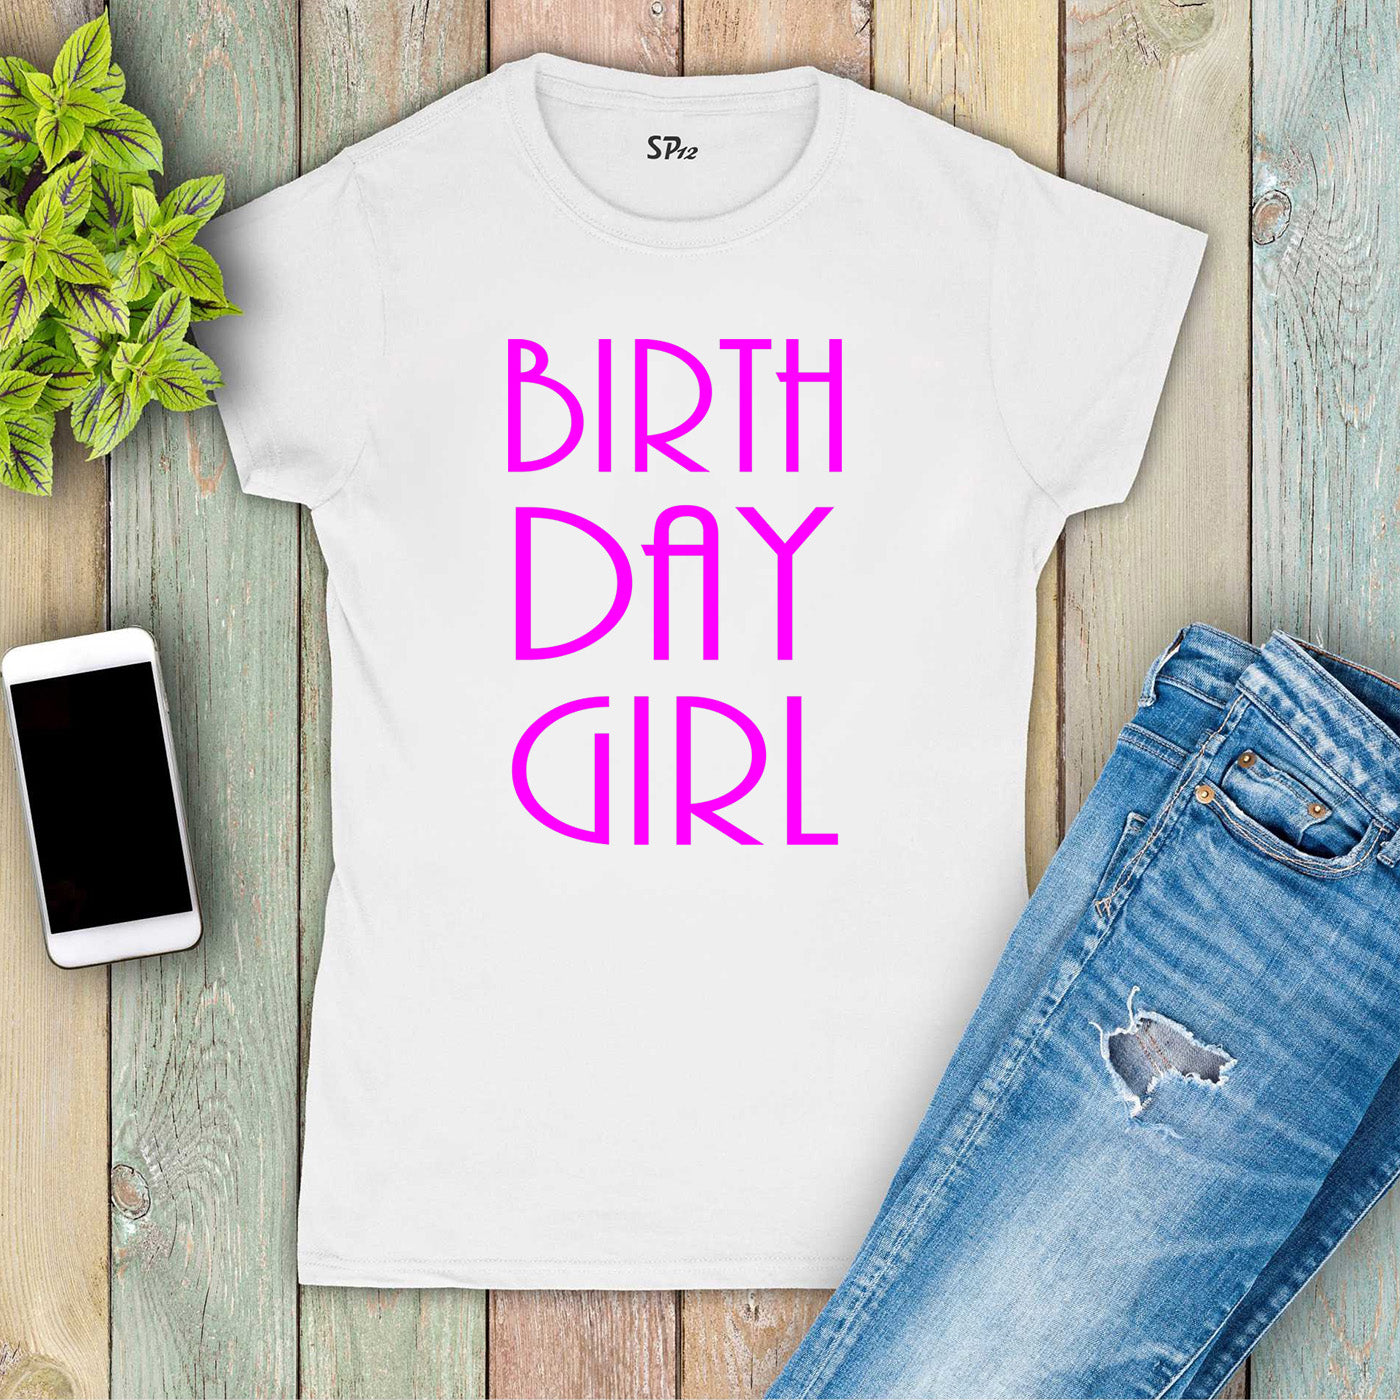 Birthday Girl T Shirt Women Pink Slogan Gift